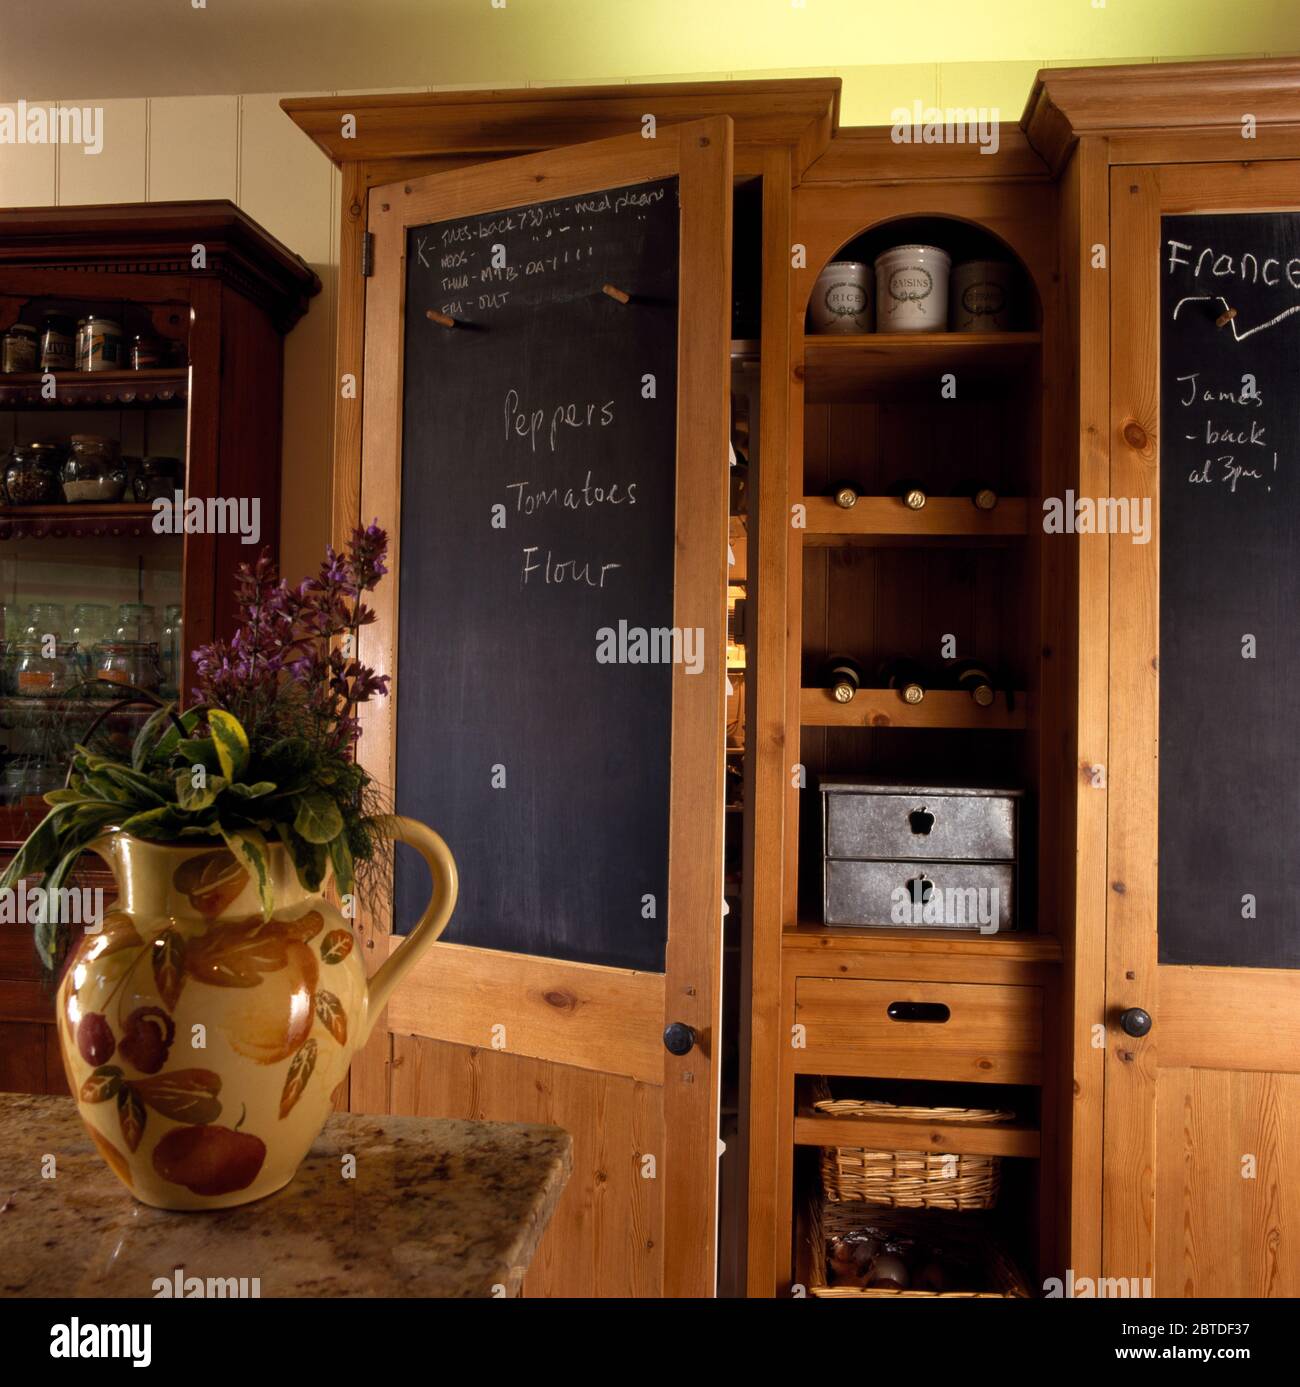 Wooden kitchen storage unit with blackboards on doors Stock Photo